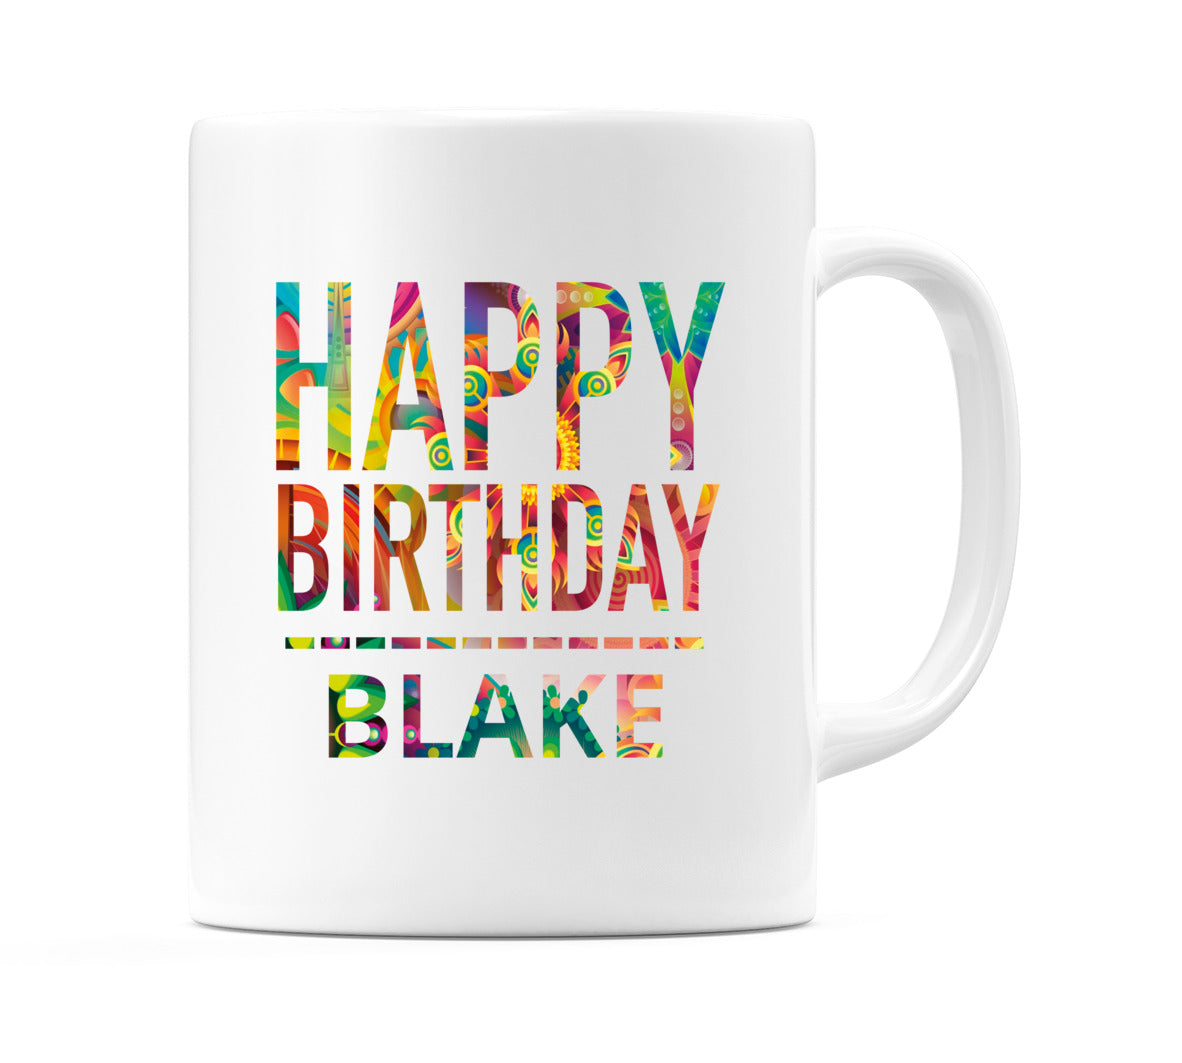 Happy Birthday Blake (Tie Dye Effect) Mug Cup by WeDoMugs